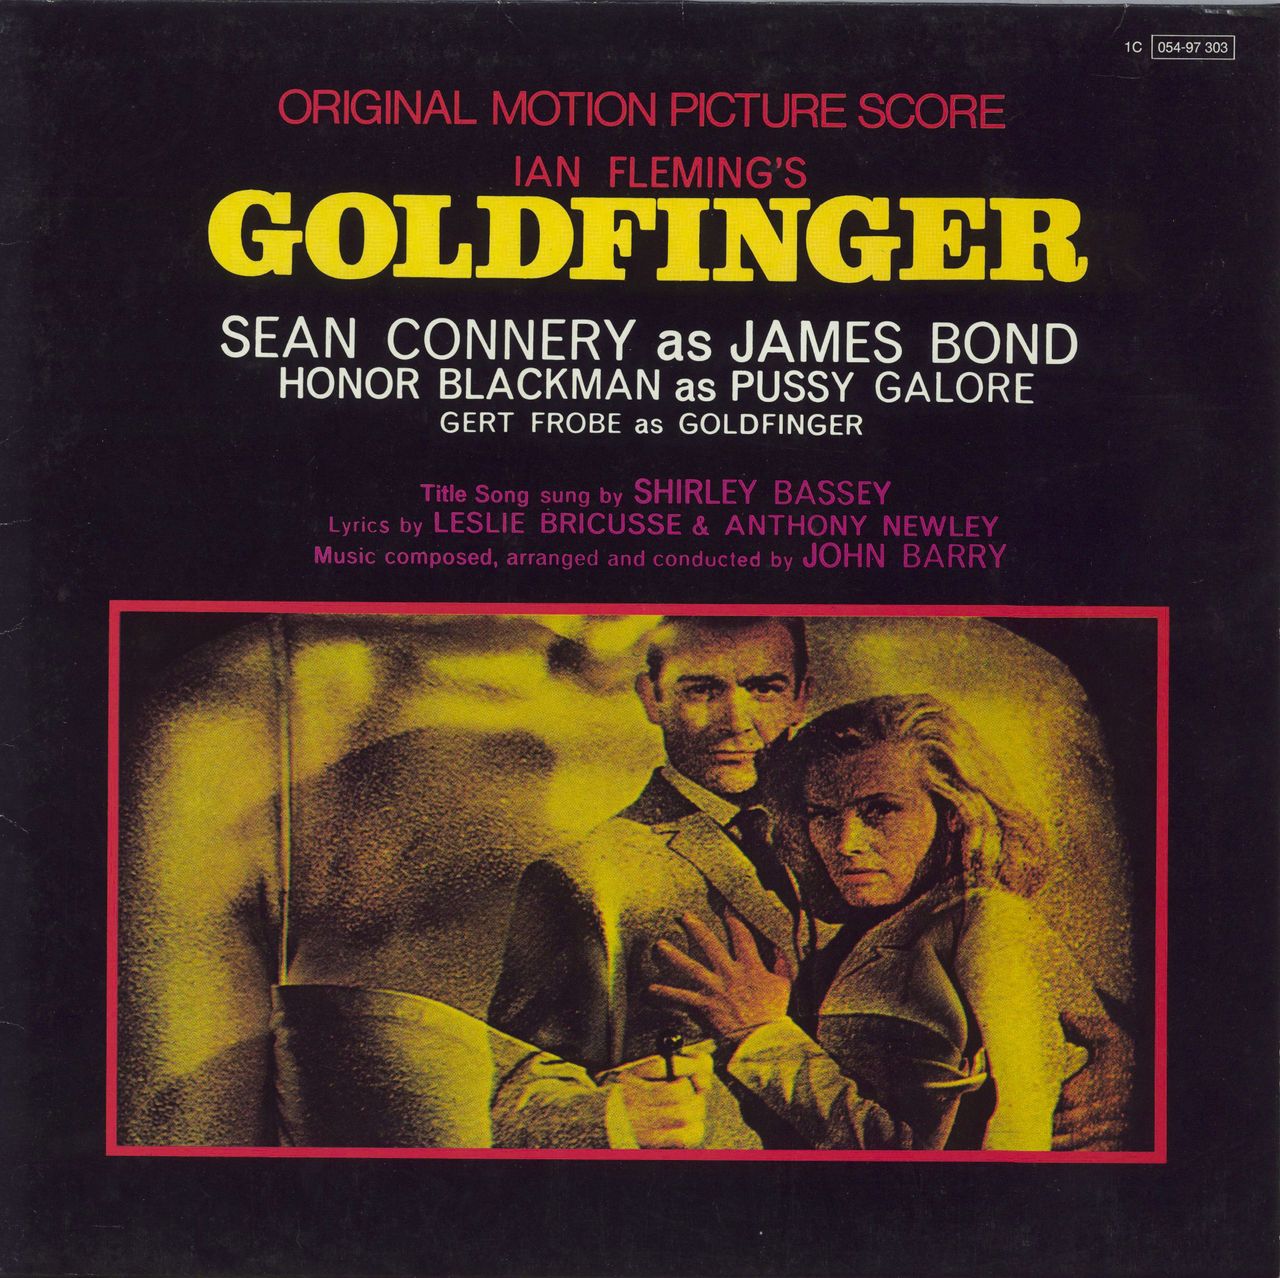 James Bond Goldfinger German vinyl LP album (LP record) 1C05497303